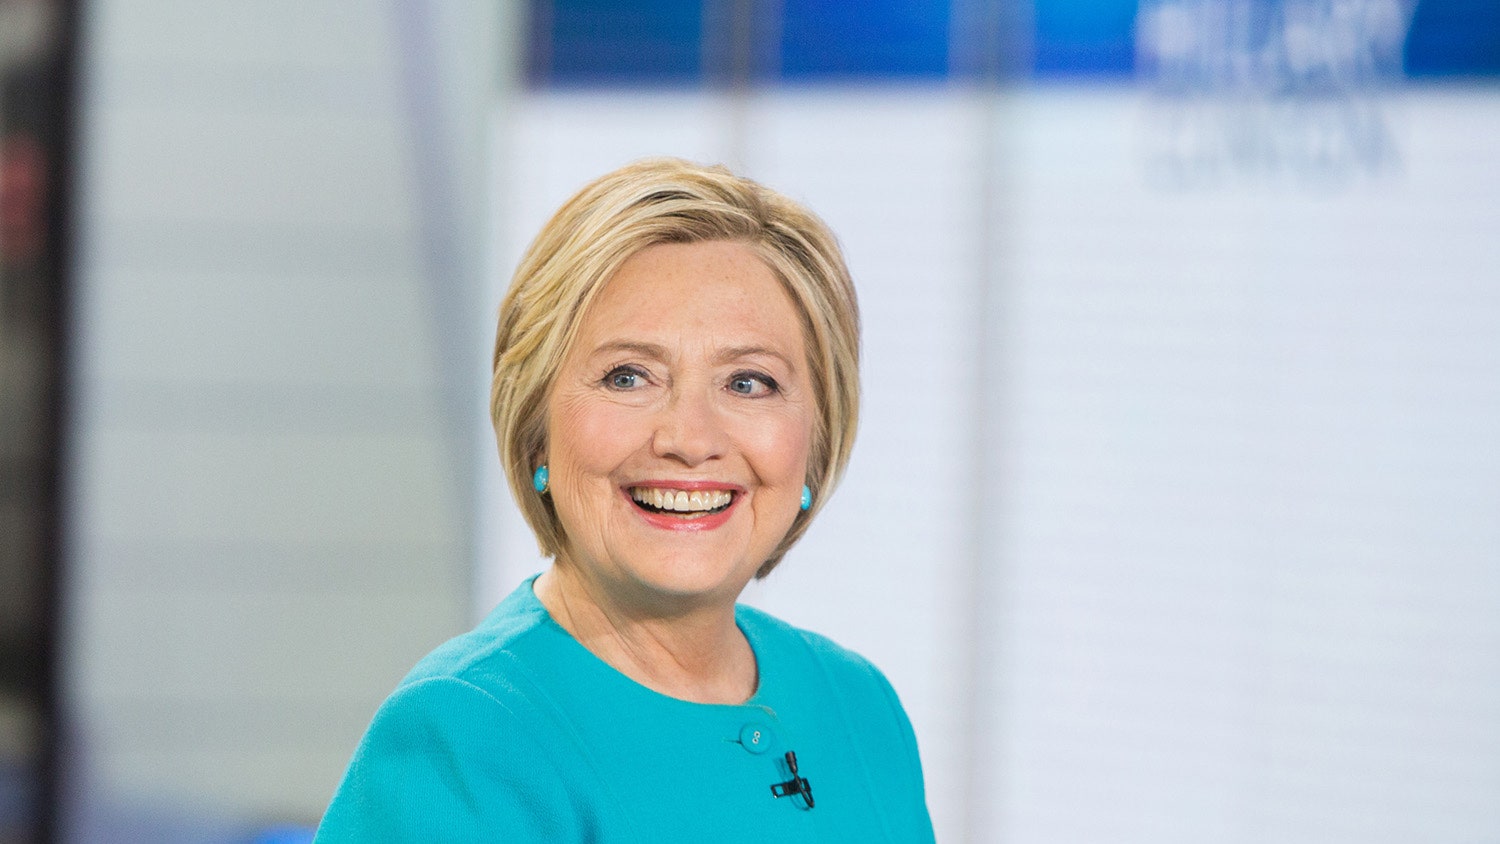 Хиллари Клинтон написала детскую книгу «Нужна целая деревня»